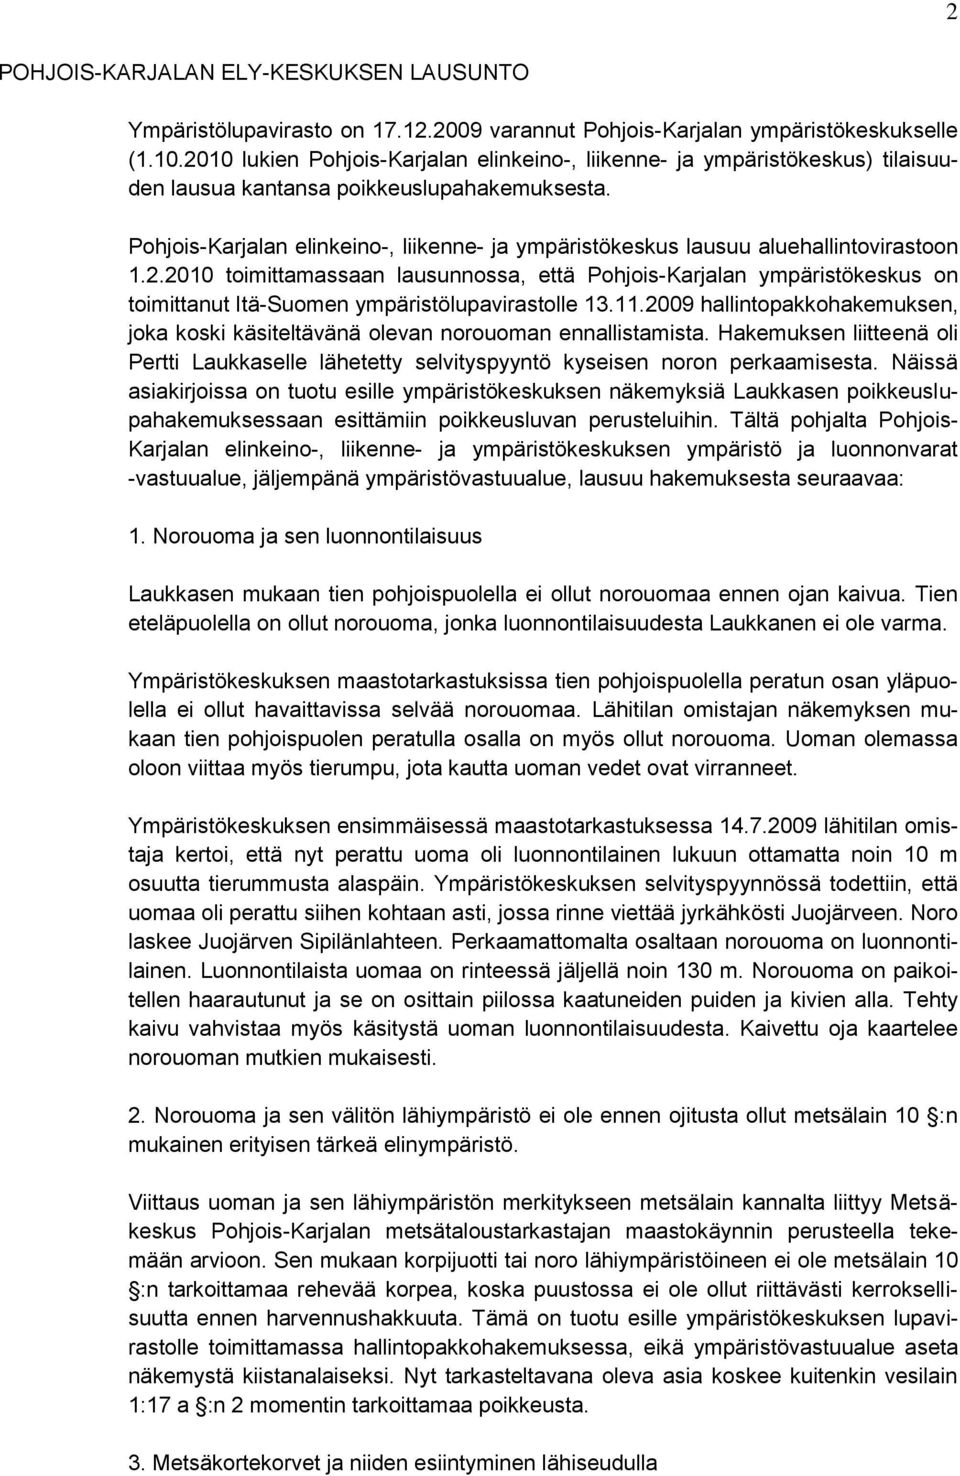 Pohjois-Karjalan elinkeino-, liikenne- ja ympäristökeskus lausuu aluehallintovirastoon 1.2.